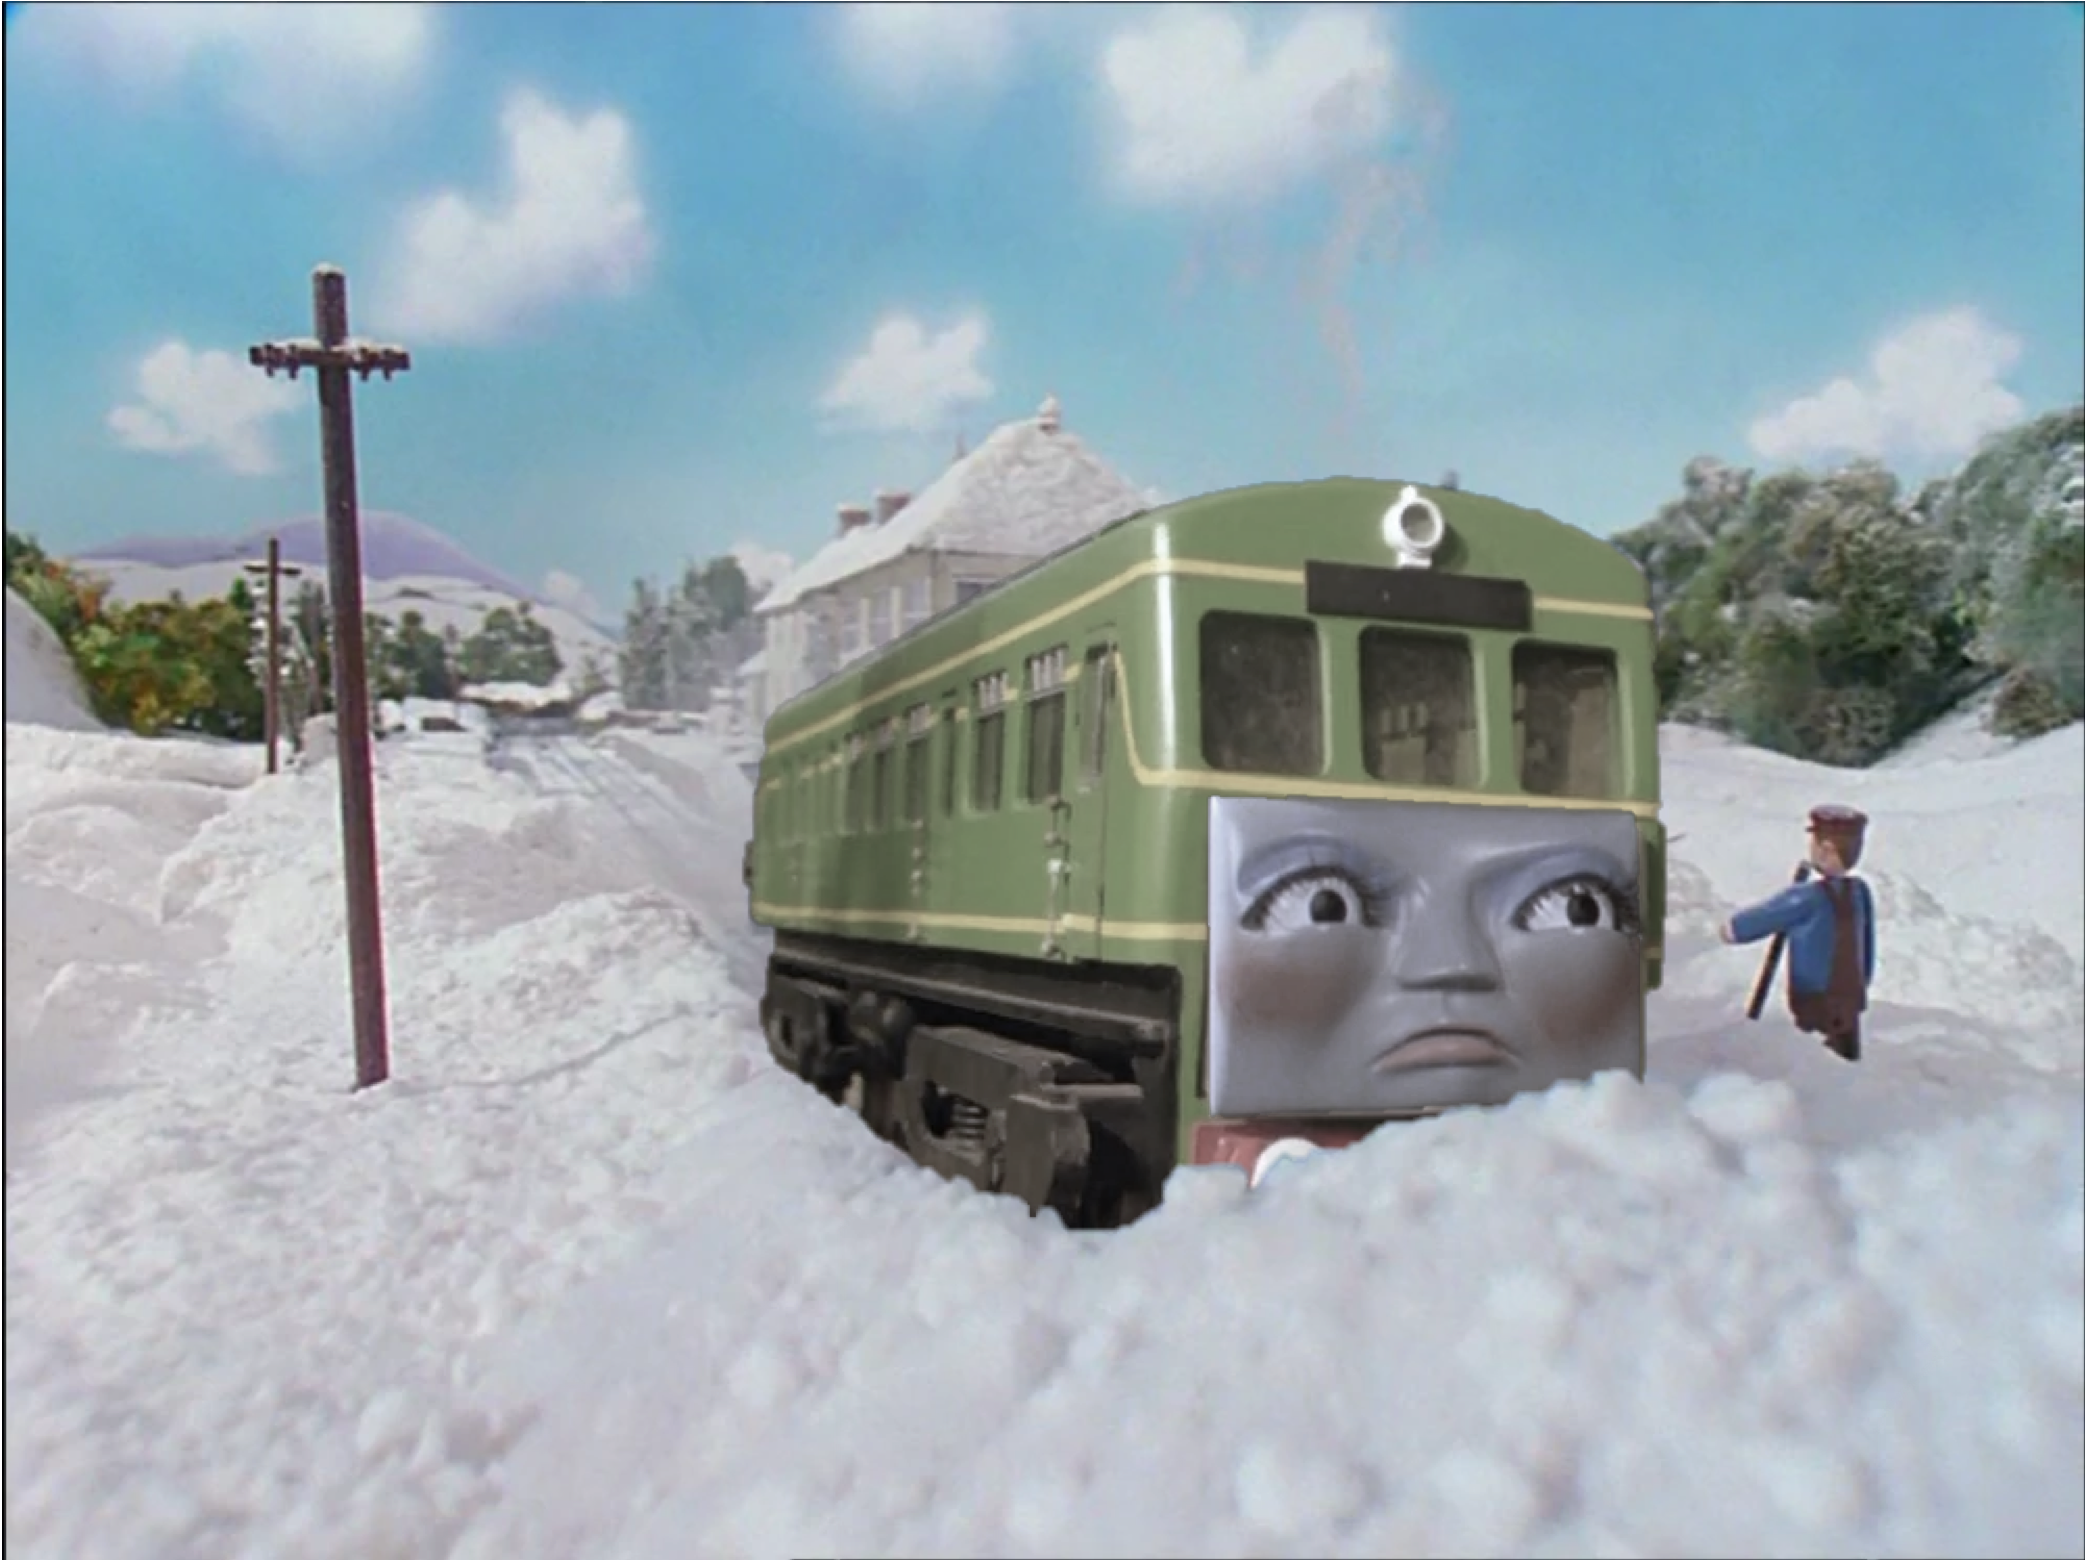 Snow Problem Adaptation - Thomas and Friends 